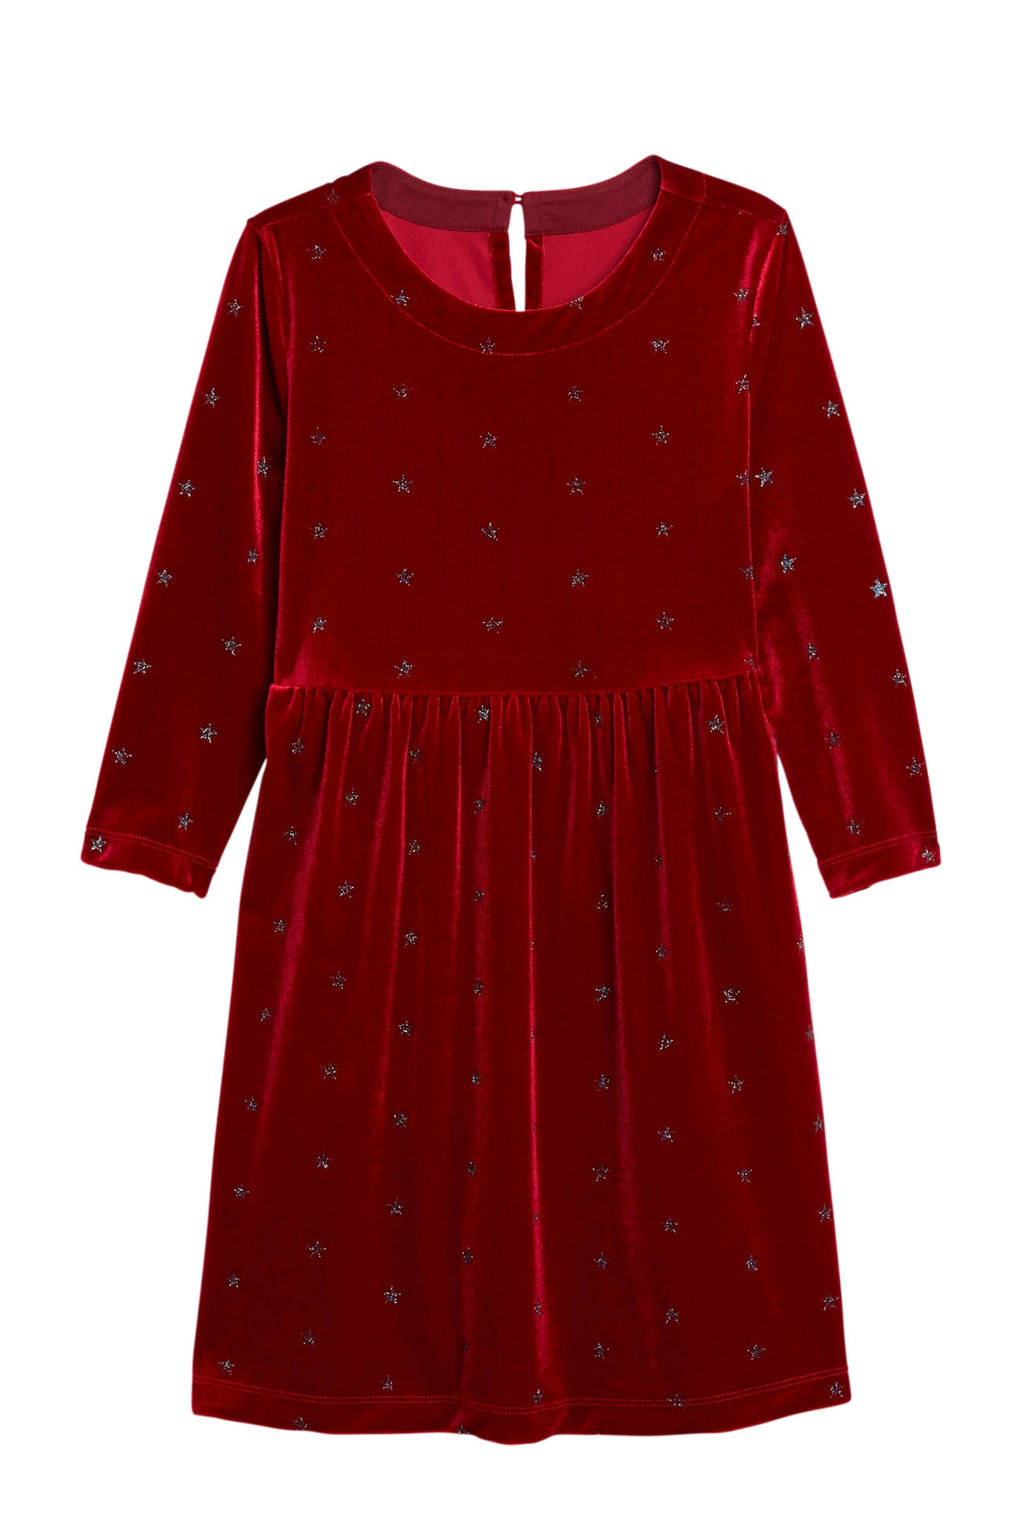 Onwijs GAP fluwelen jurk met all over print en glitters warm rood | wehkamp WW-14